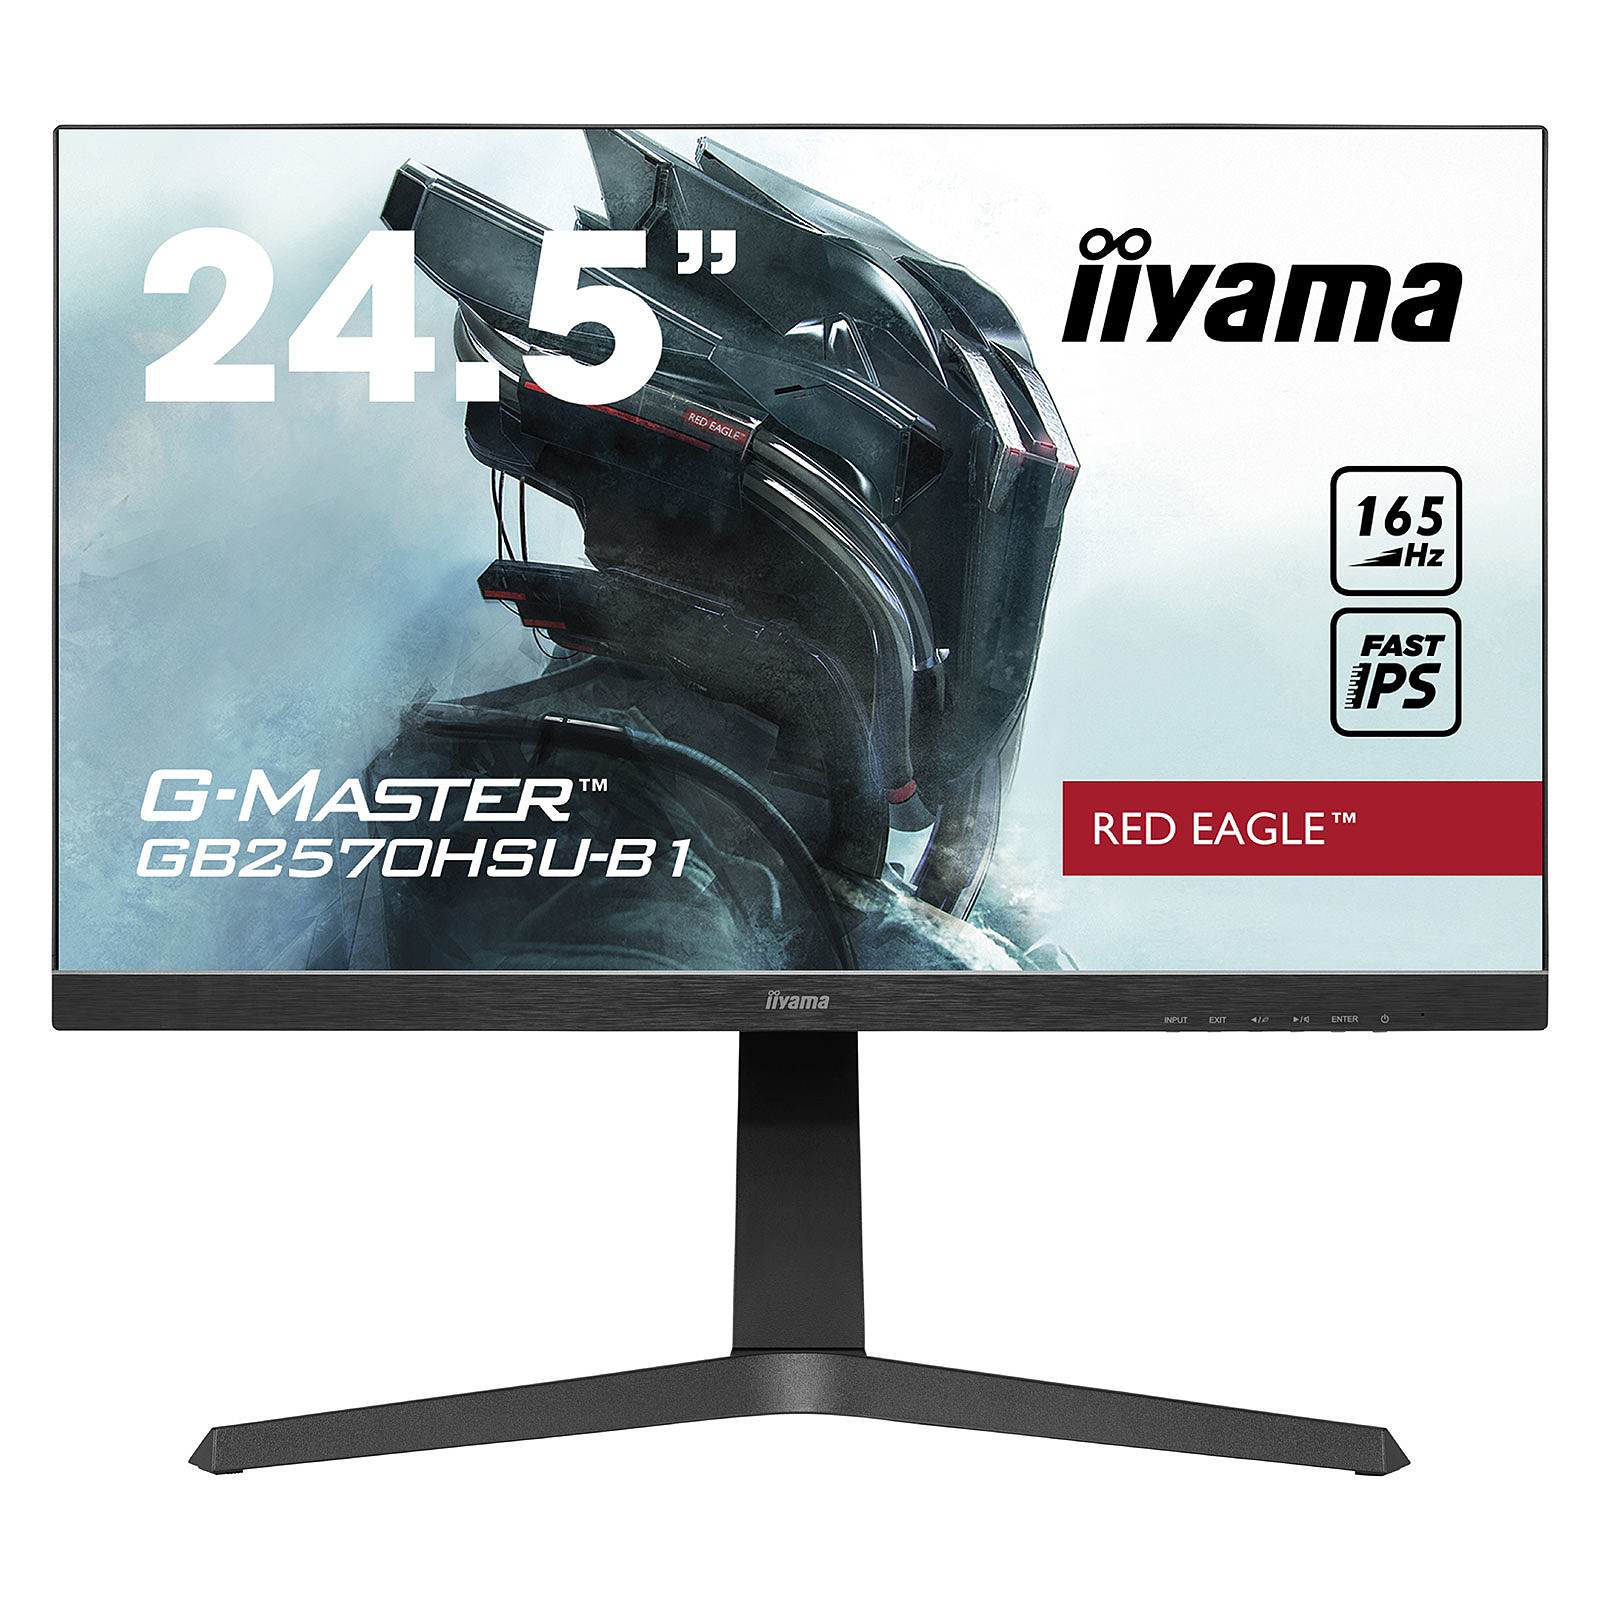 iiyama 24.5" LED - G-Master GB2570HSU-B1 Red Eagle · Occasion - Ecran PC iiyama - Occasion